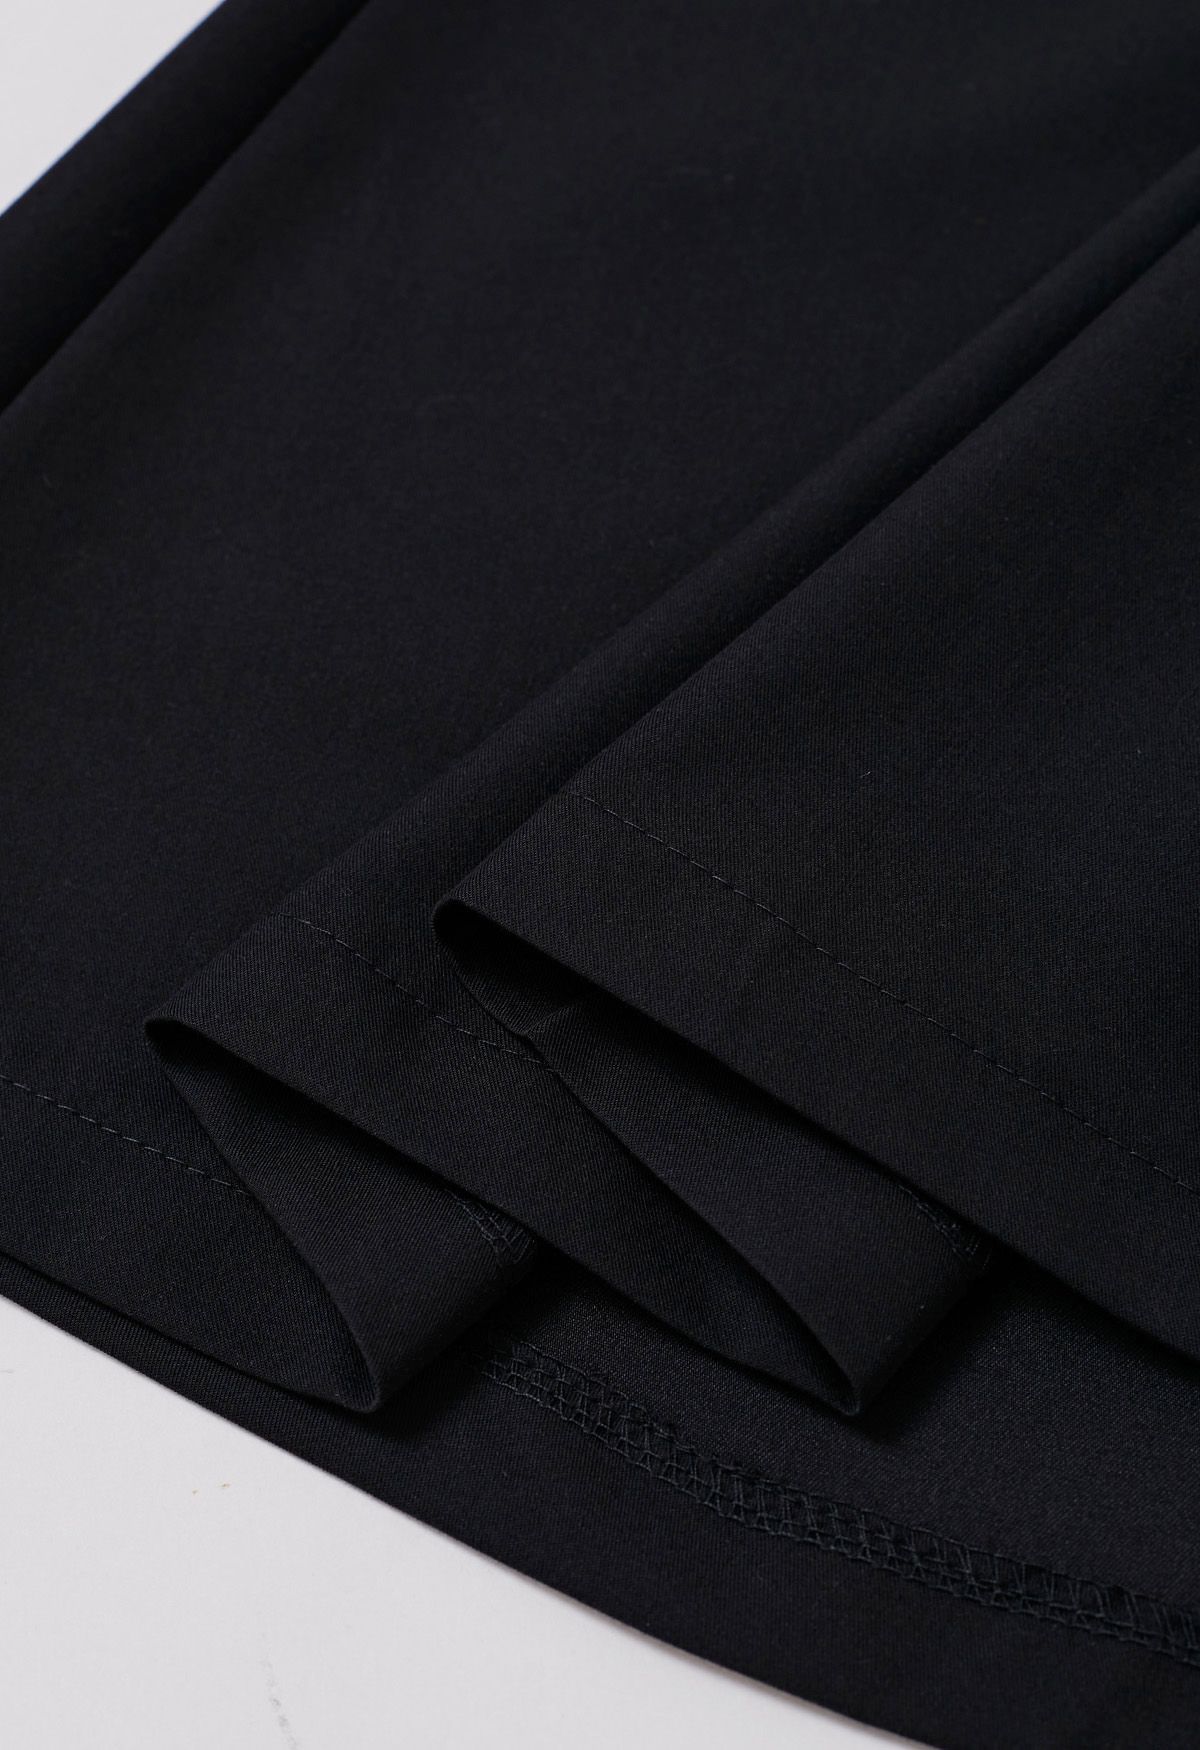 Contrast Pleat Waistband Maxi Skirt in Black